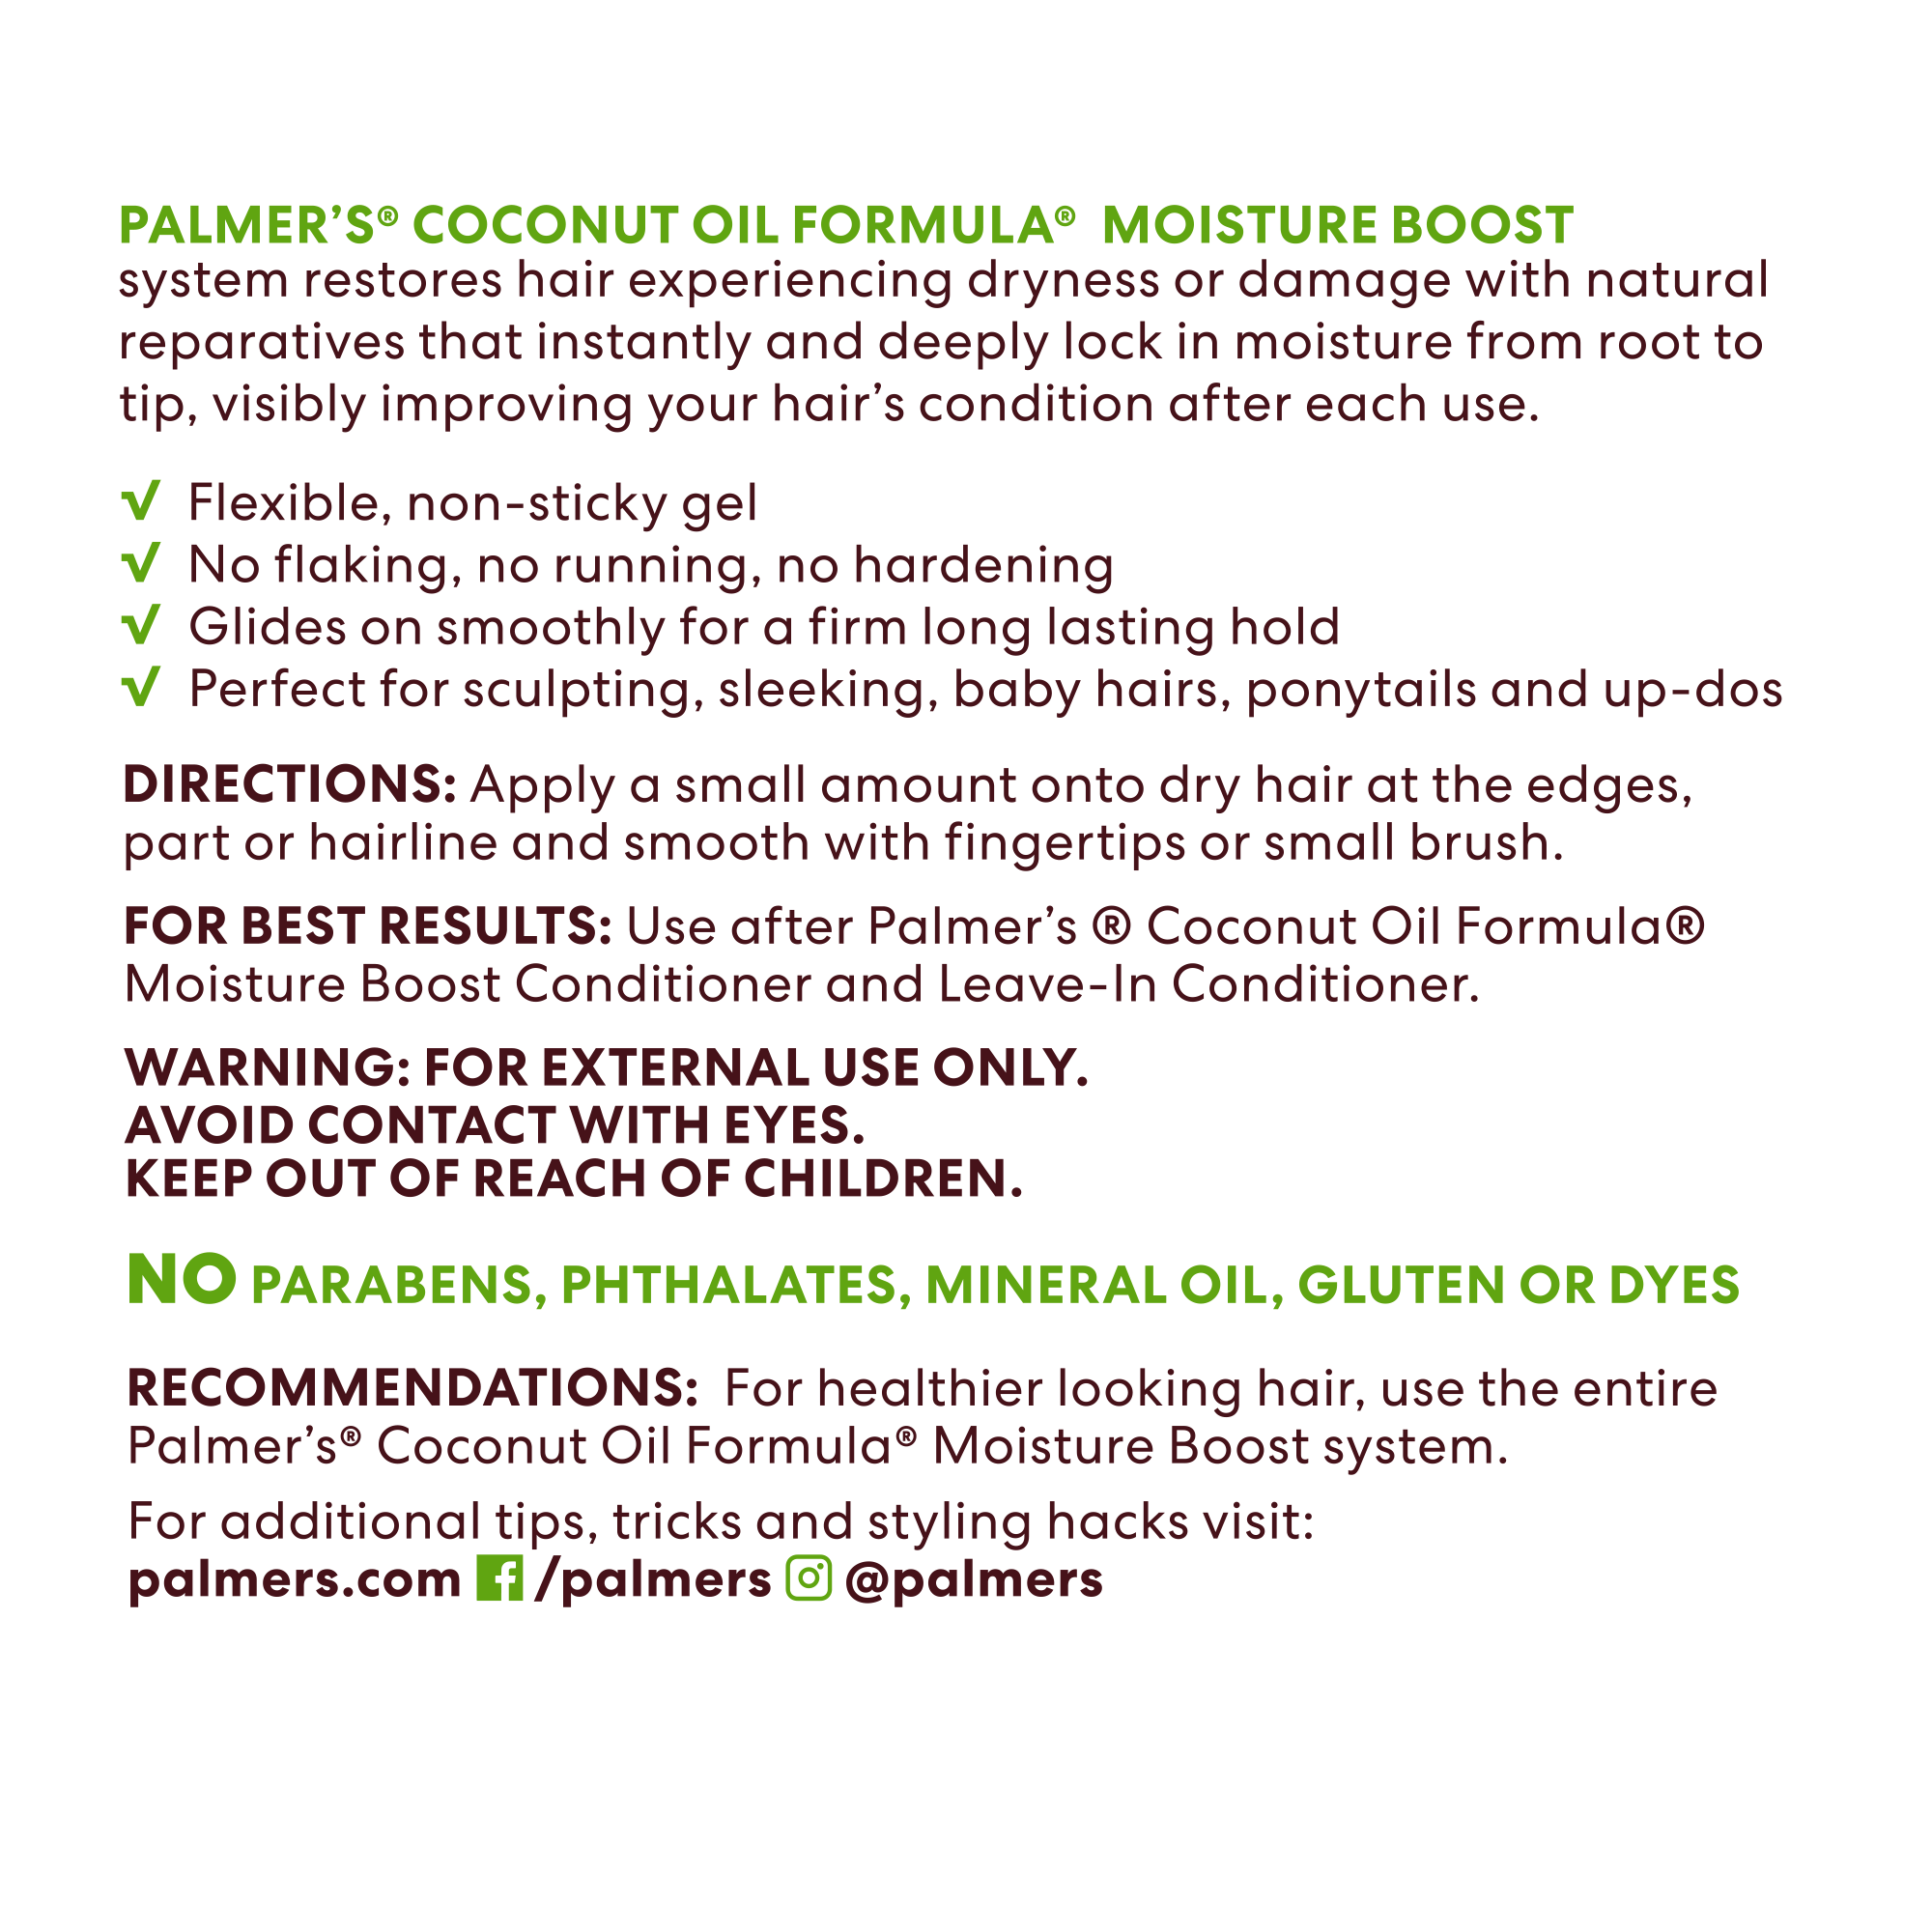 Palmer's Coconut Oil Formula Moisture Boost Edge Gel, 2.25 oz. - image 3 of 17